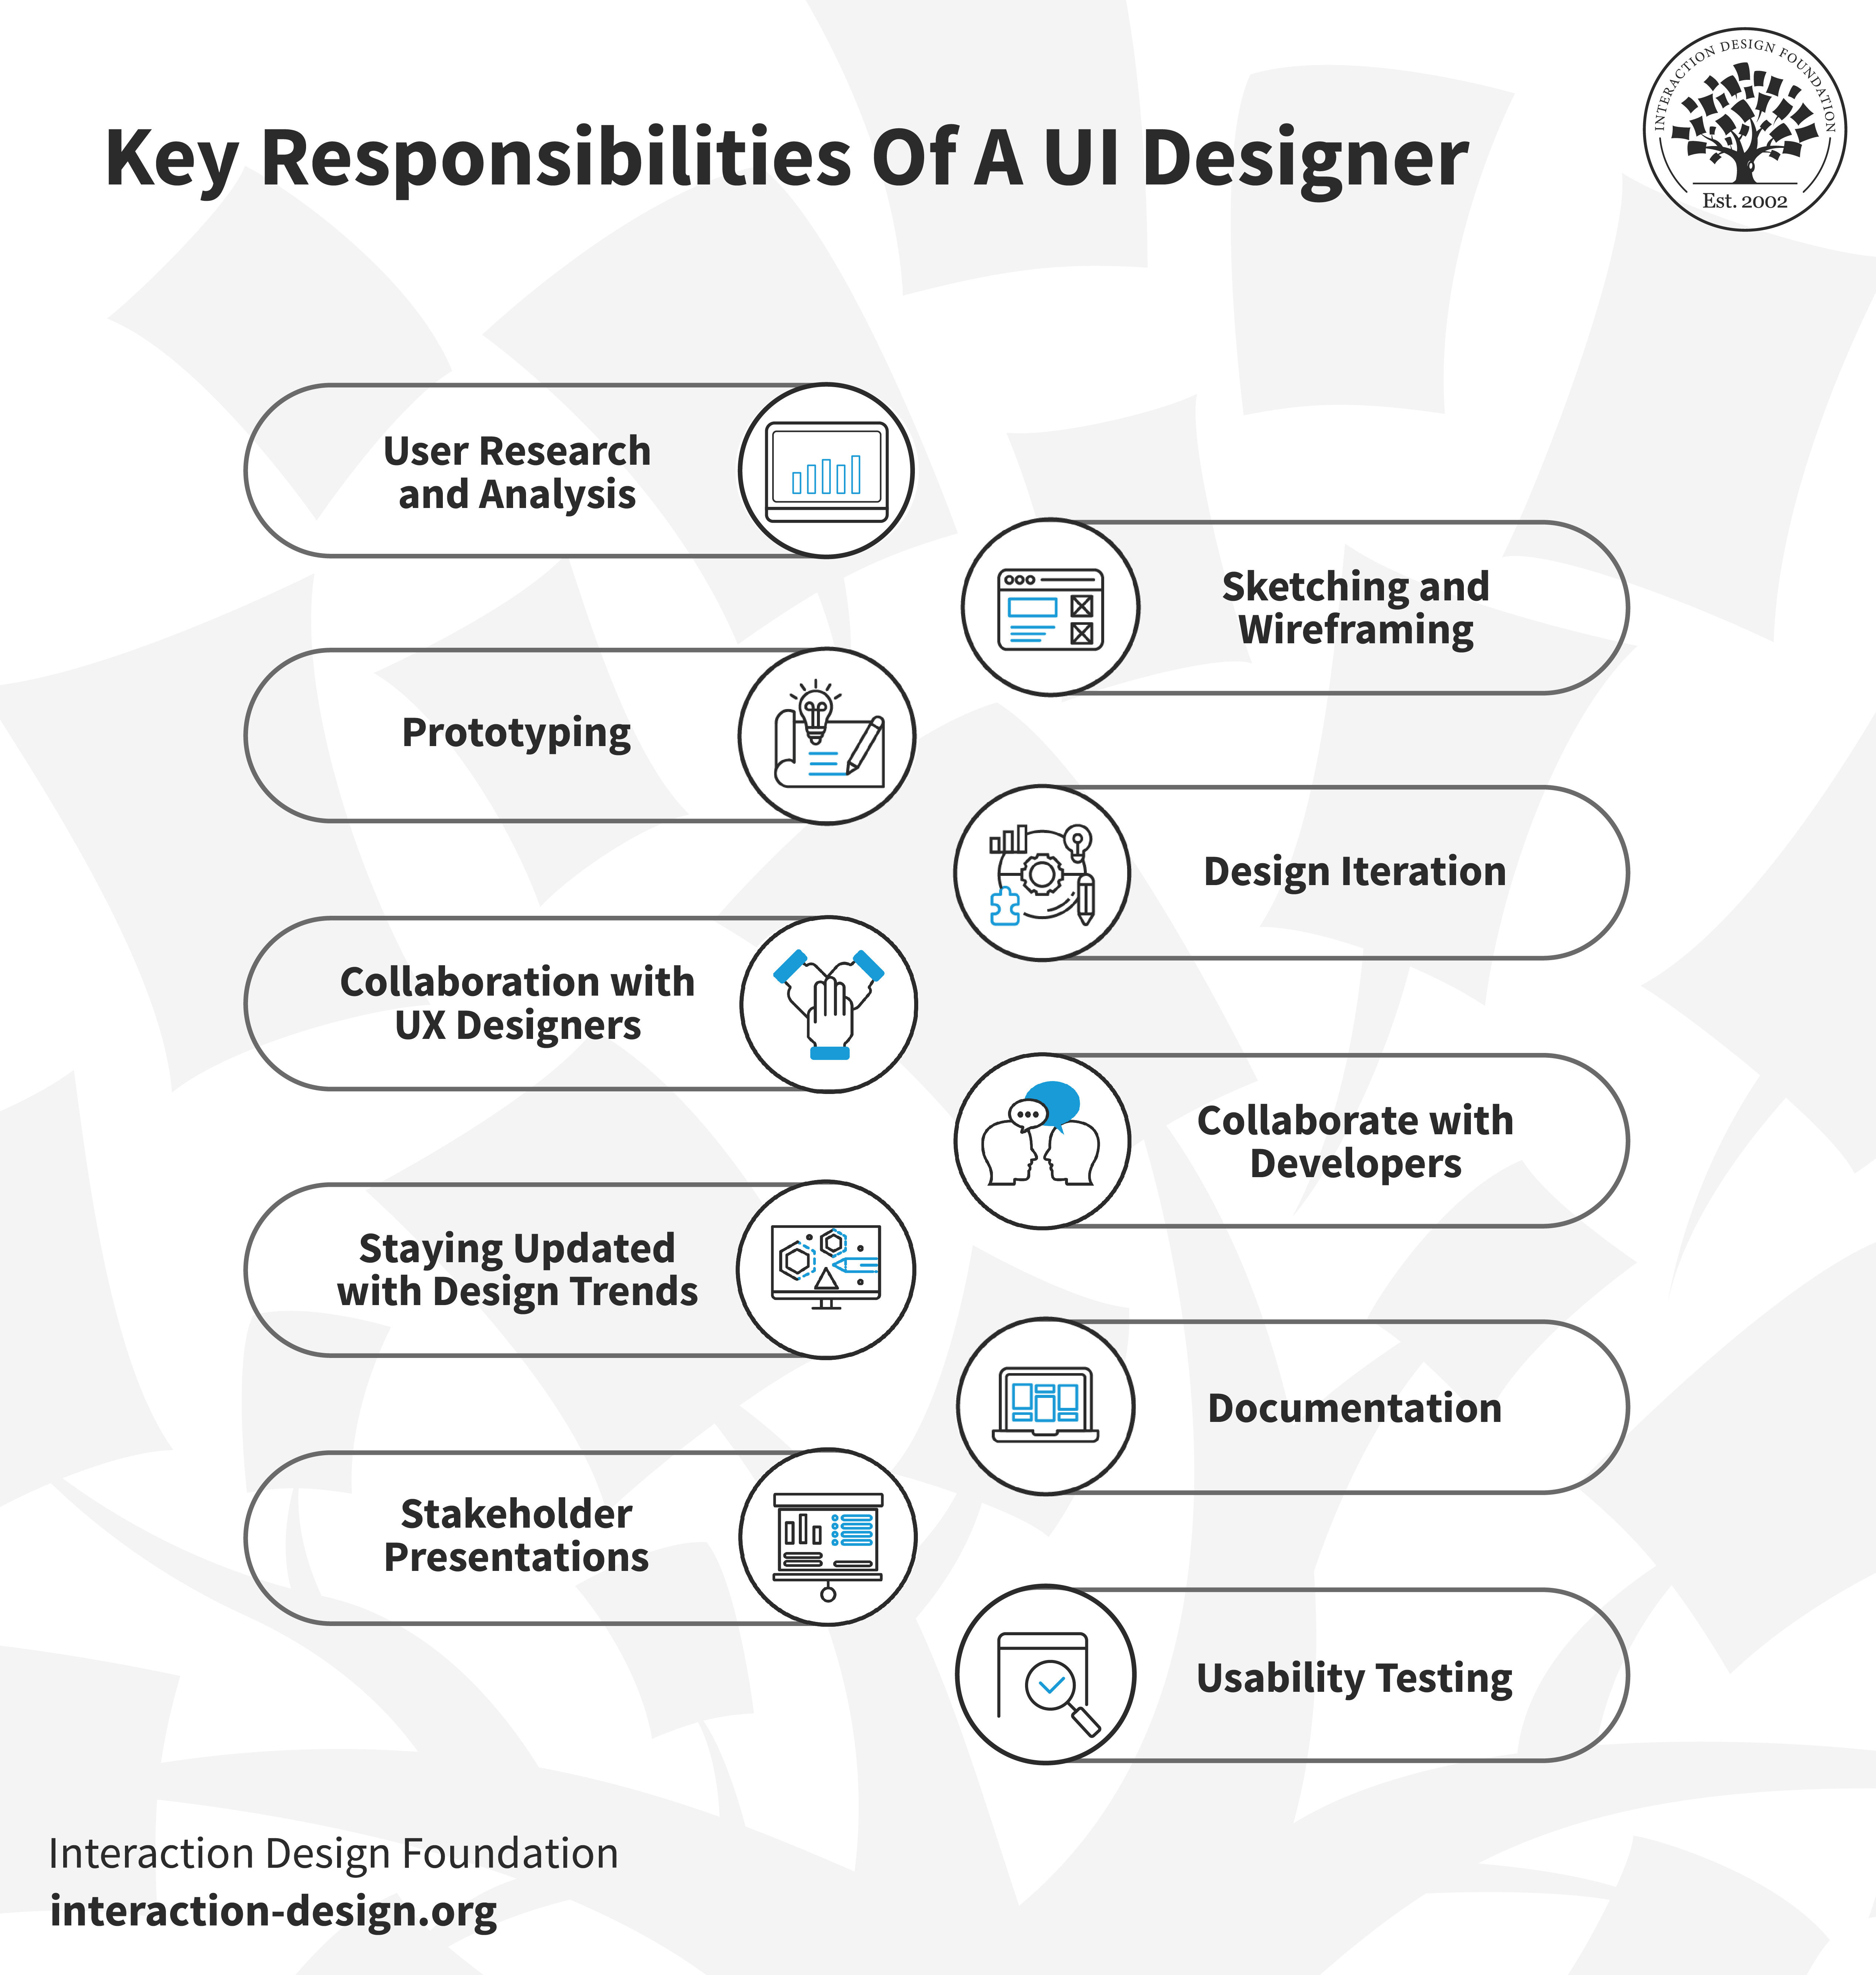 A diagram showing ten key responsibilities of a user interface UI designer